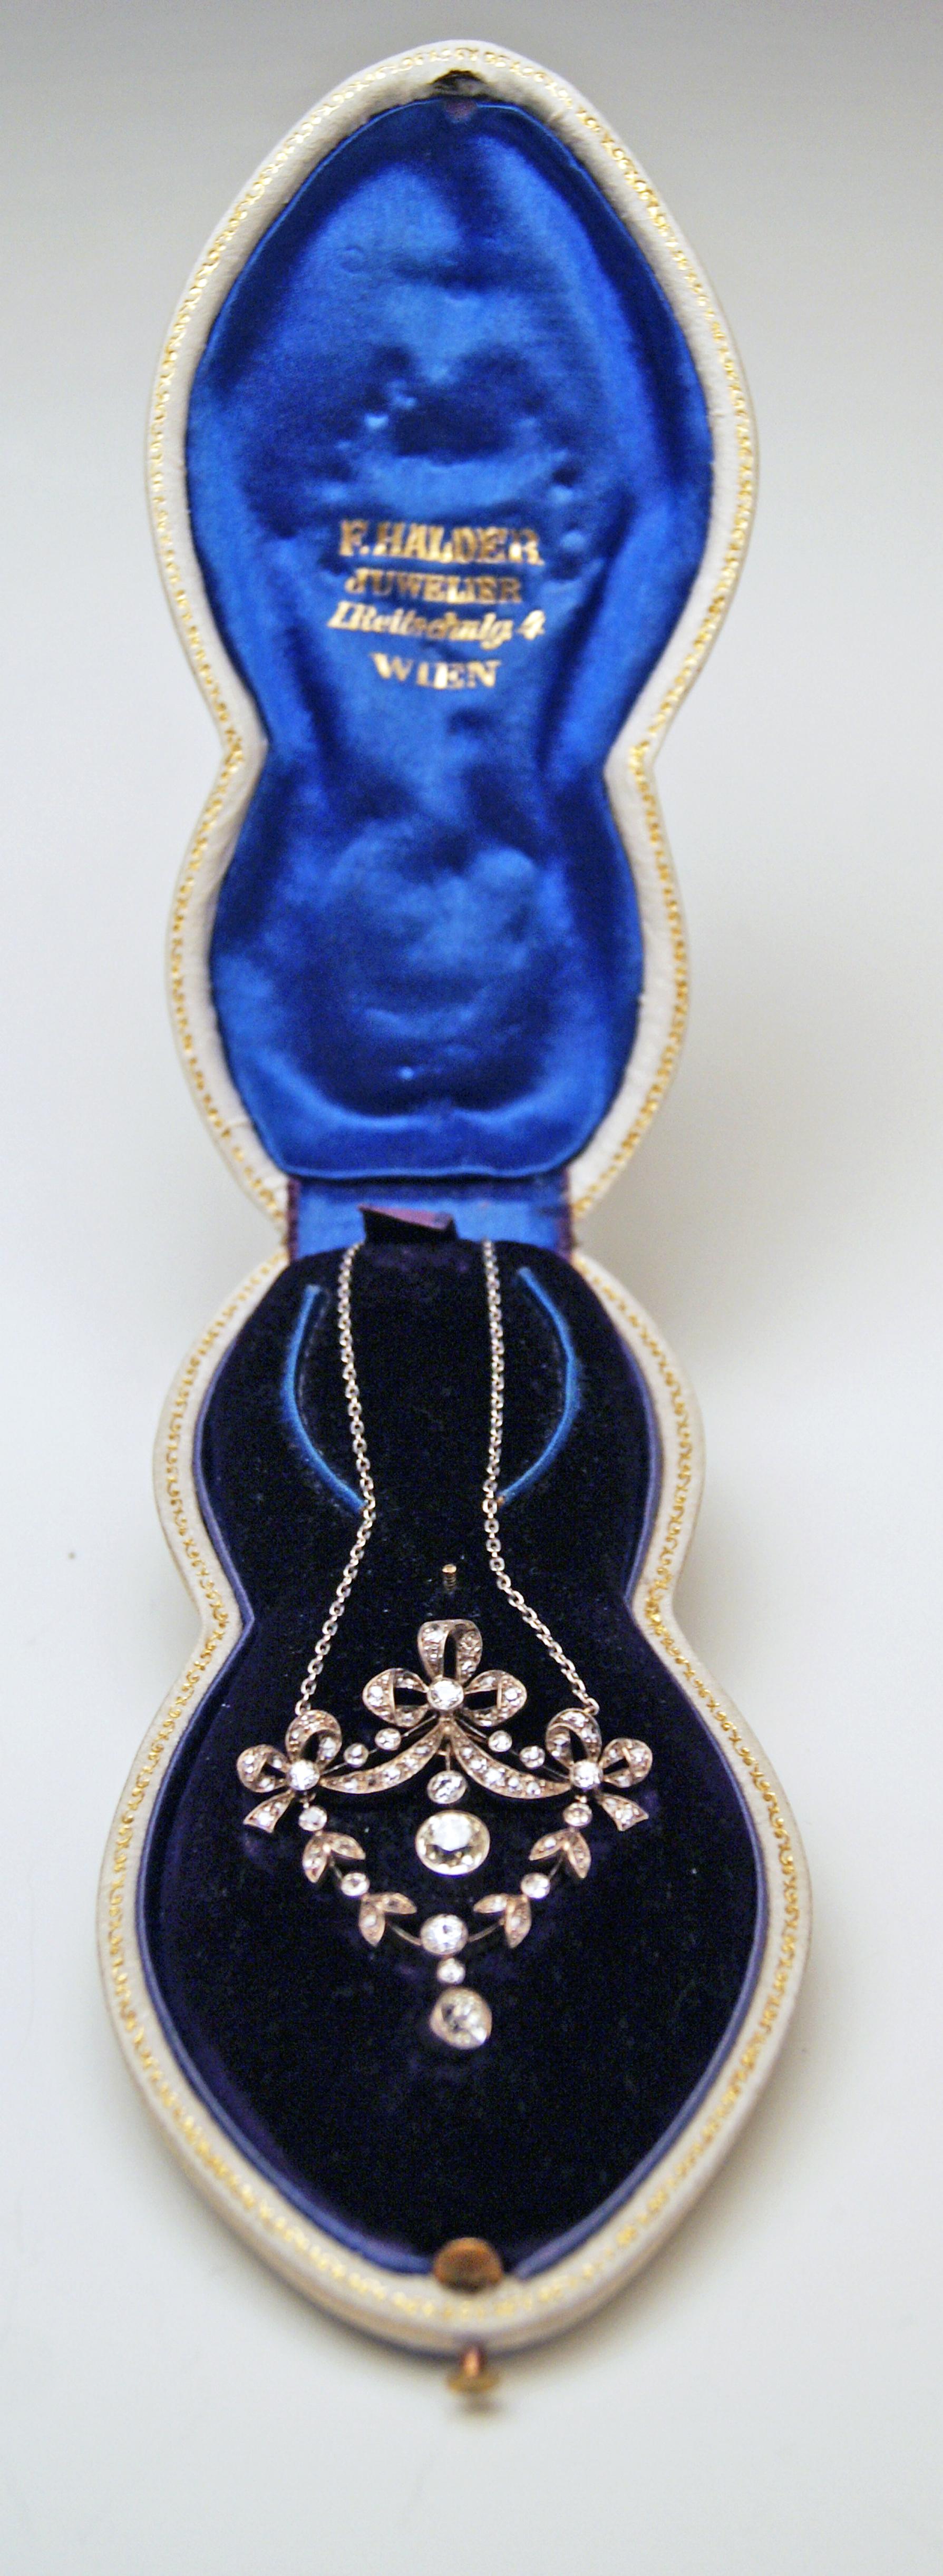 Women's Art Nouveau Necklace Brooch Gold 585 Diamonds ‘3.0 Carat’ by Halder Vienna